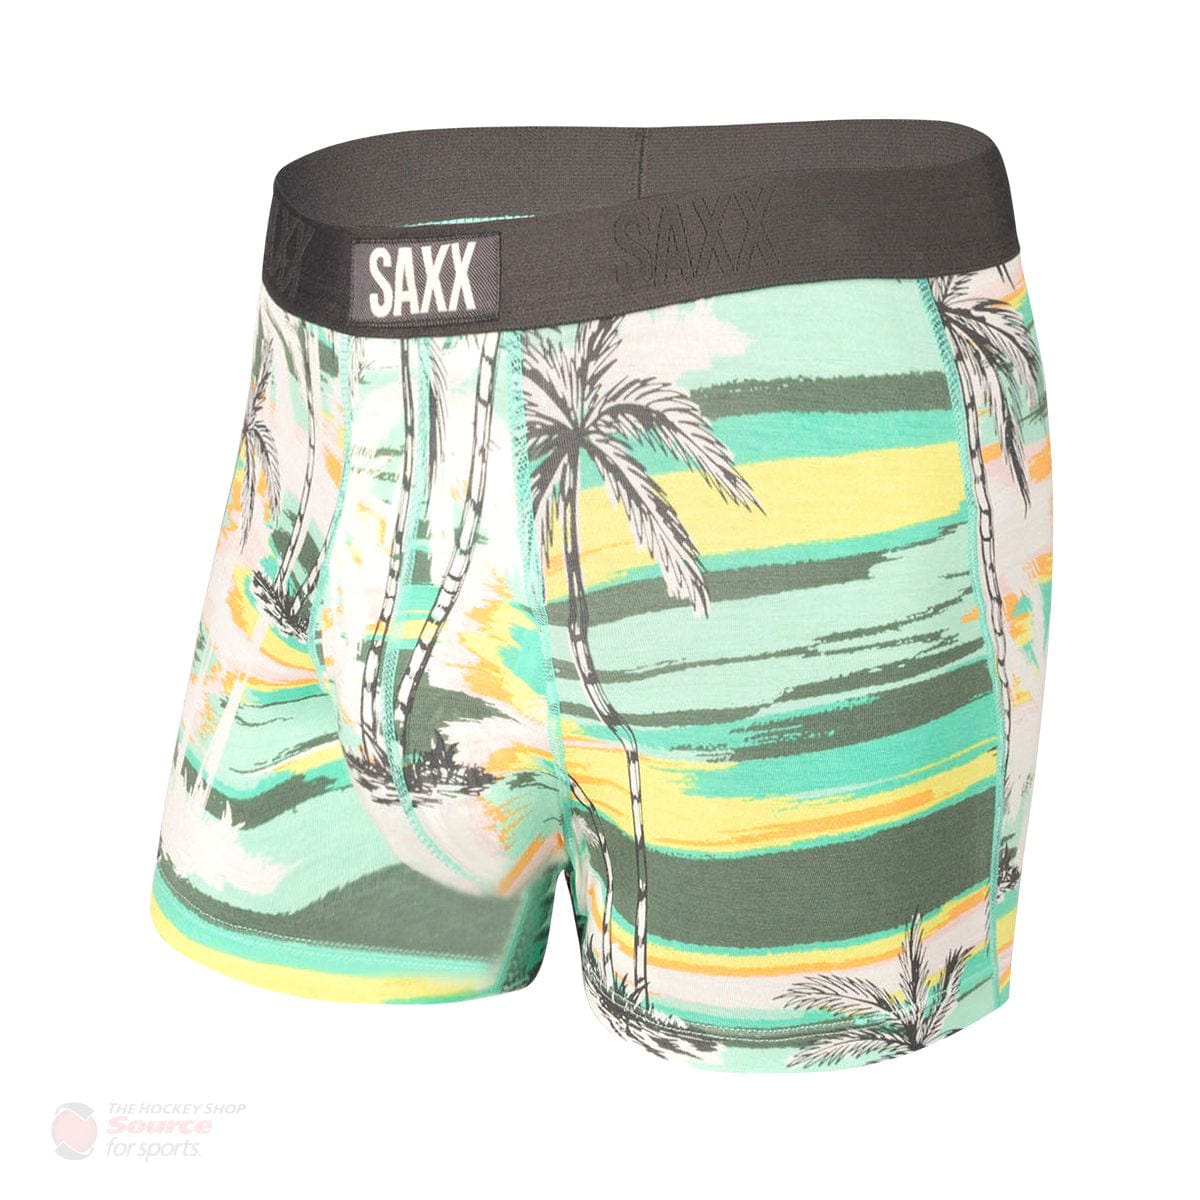 Saxx Ultra Boxers - Green No Bad Days